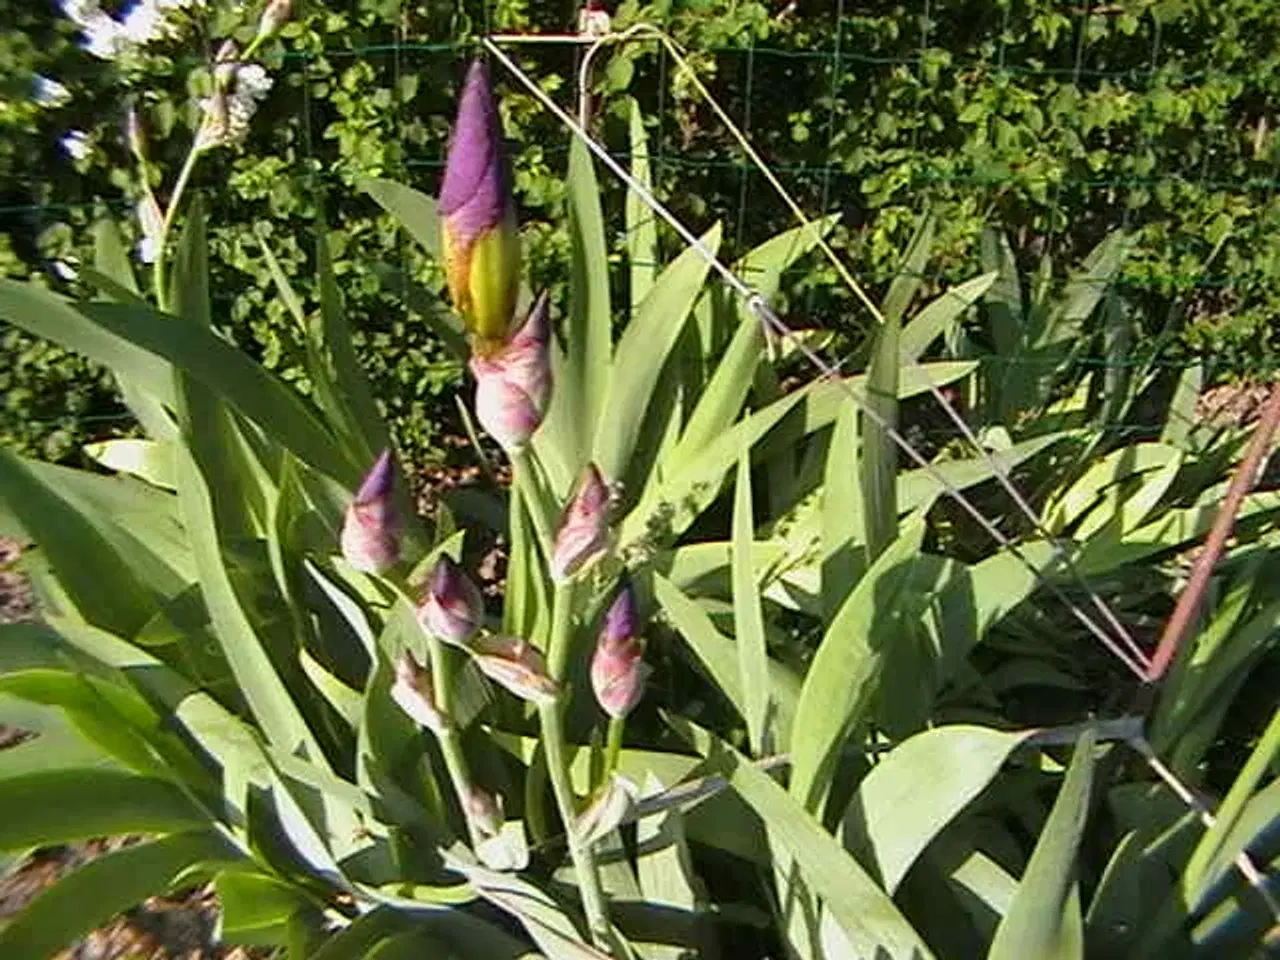 Billede 2 - Stauder. Storblomstrende Iris.